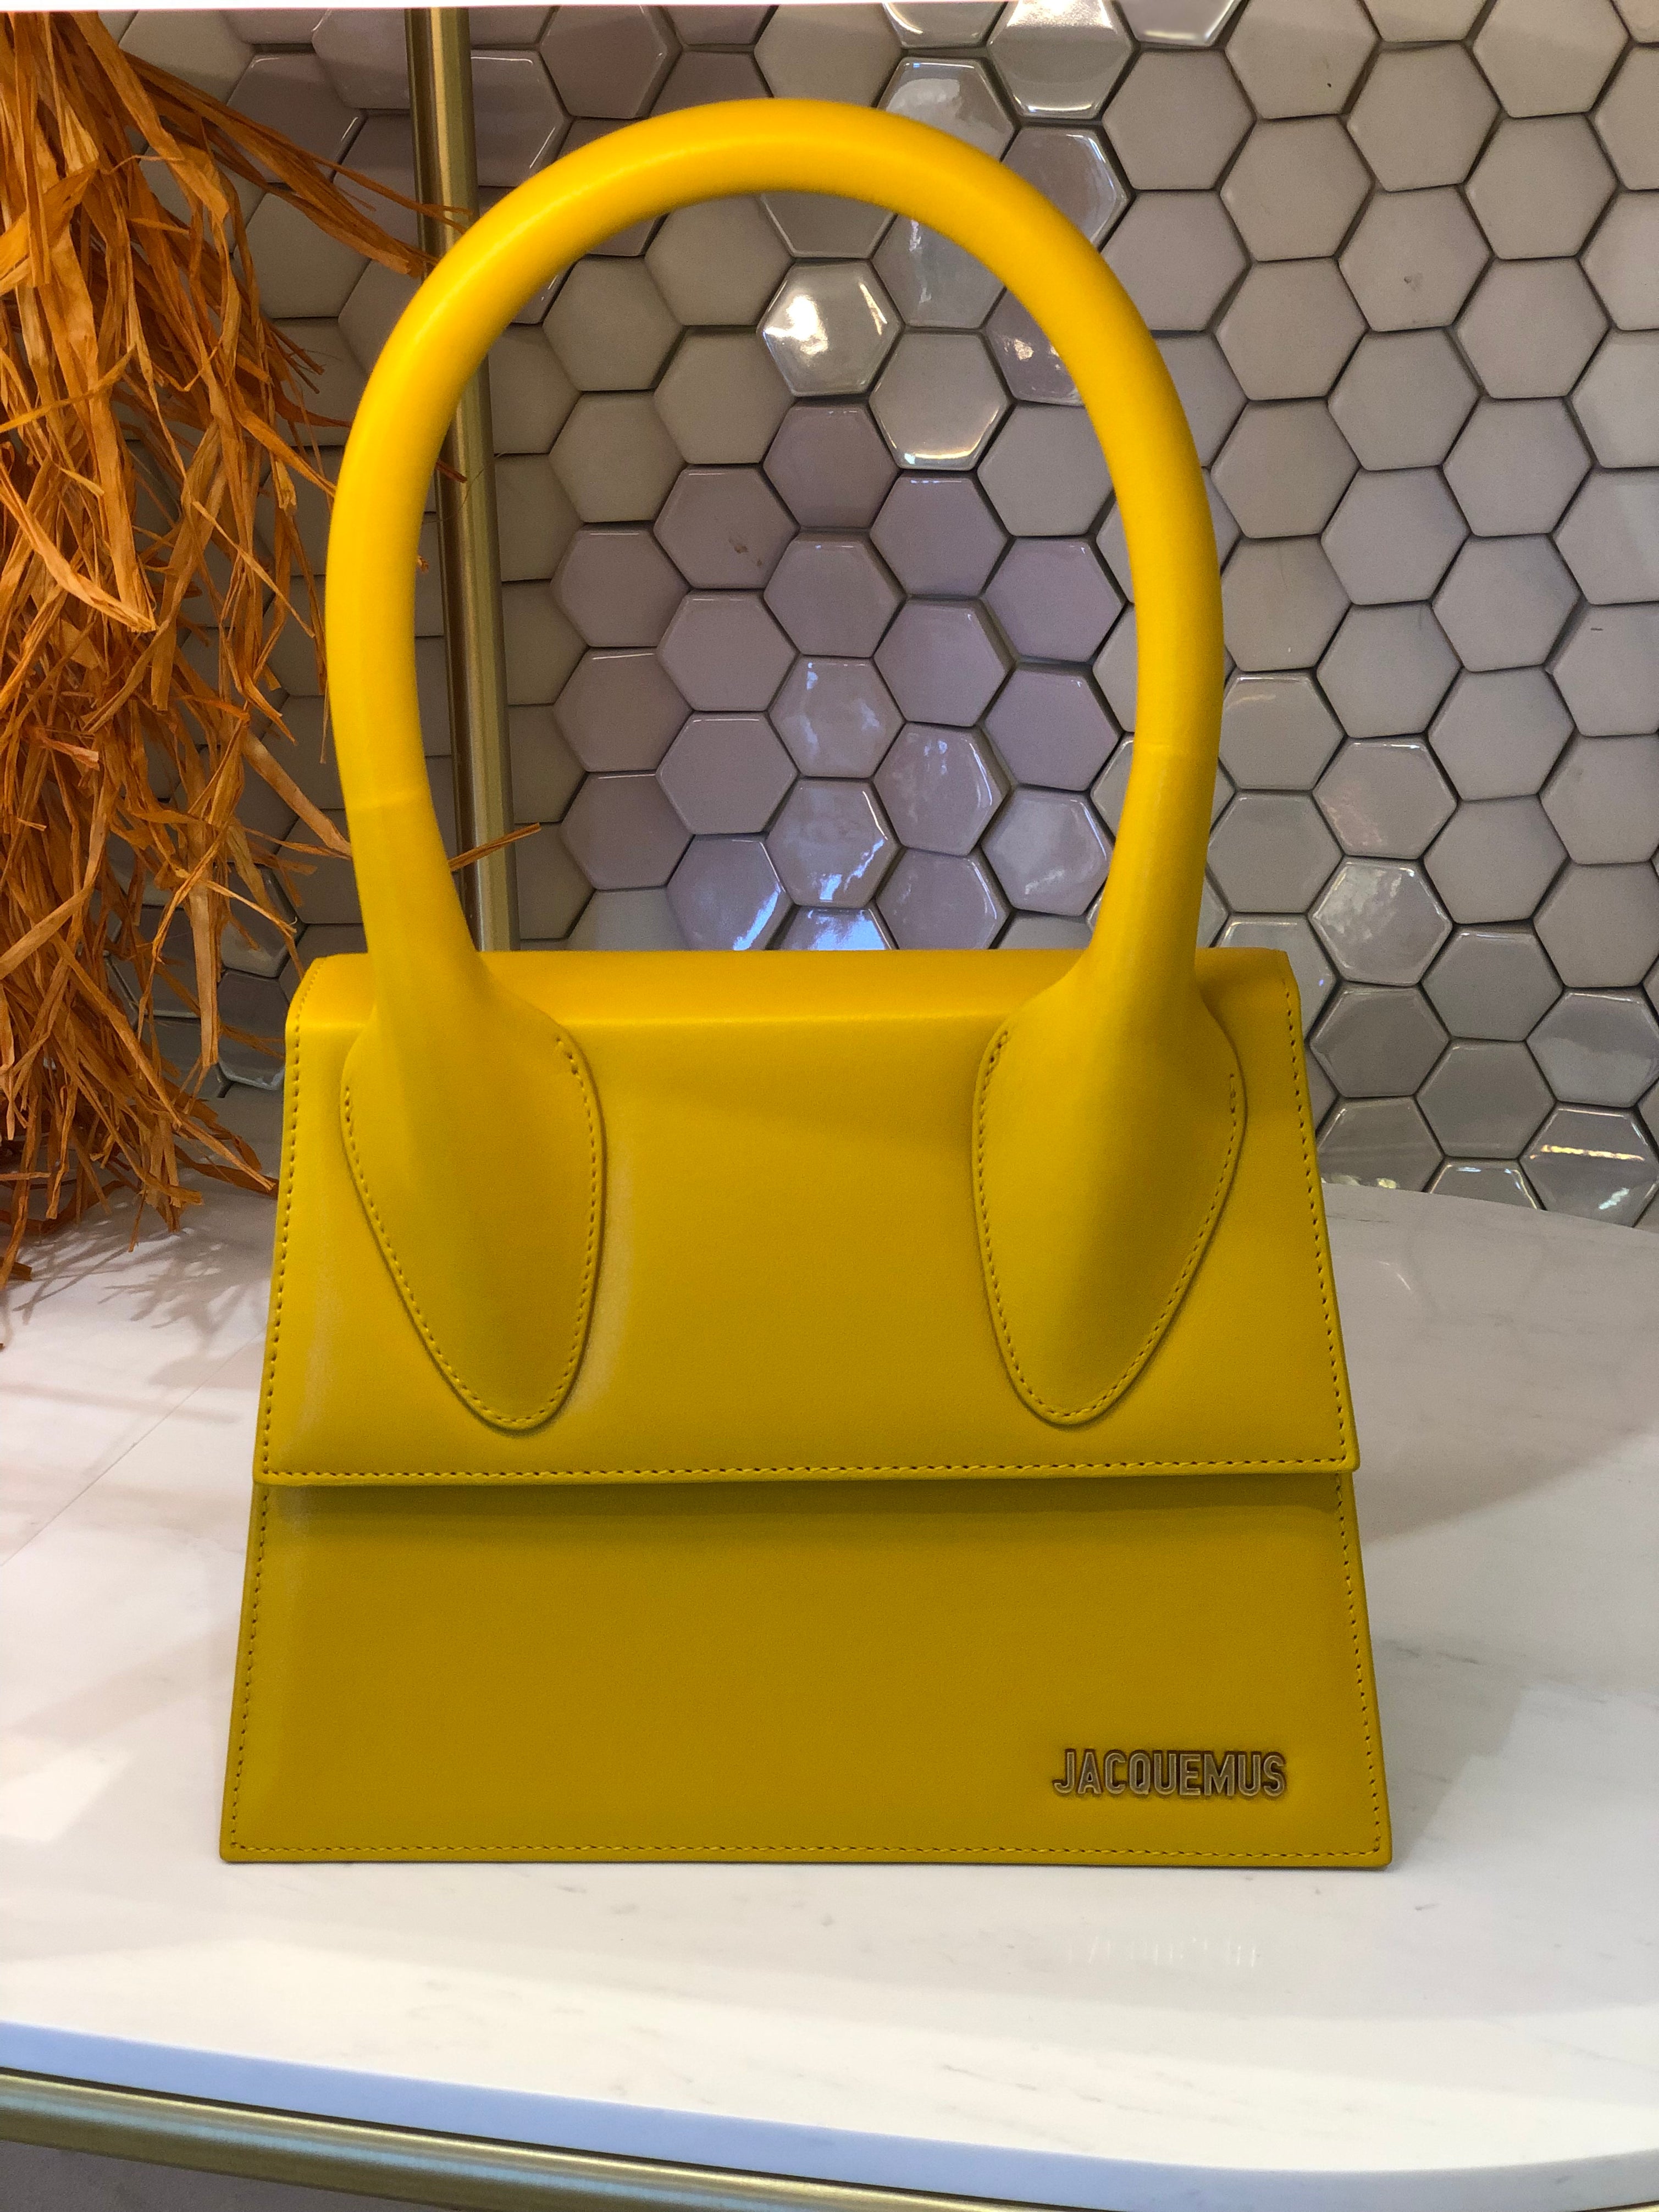 Jacquemus bags 2019 – hey it's personal shopper london